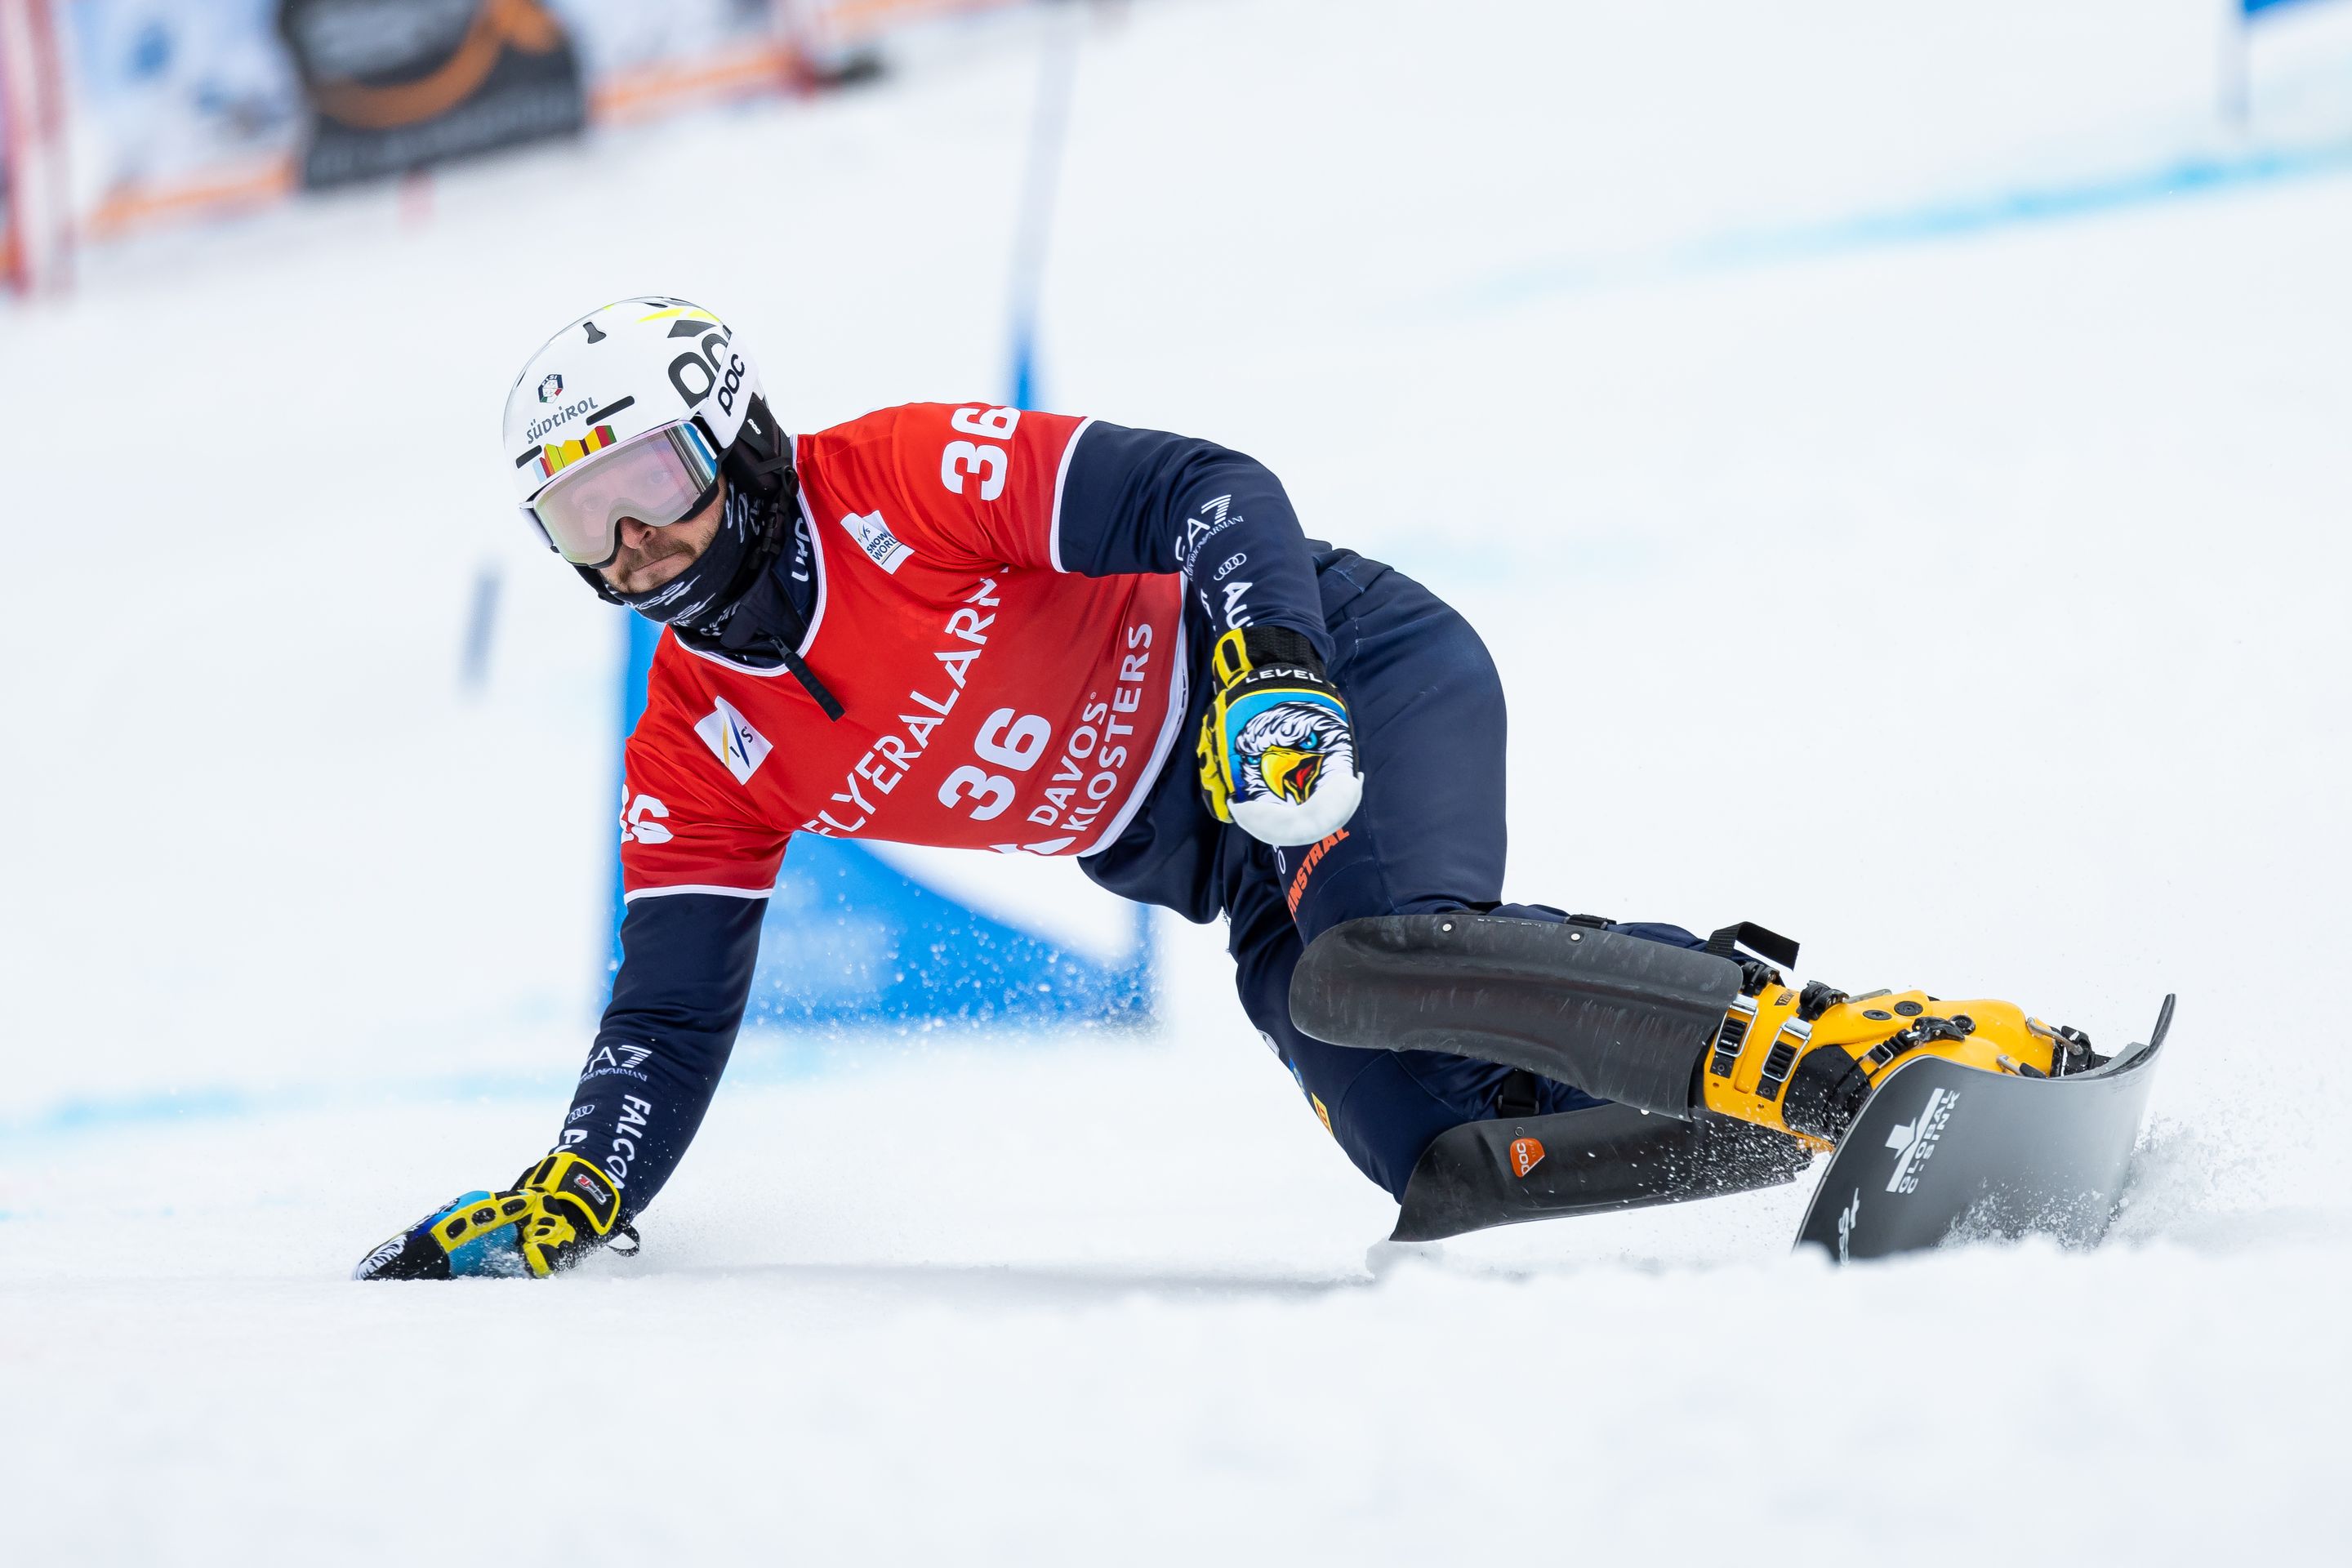 Daniele Bagozza in action in Davos © Miha Matavz/FIS